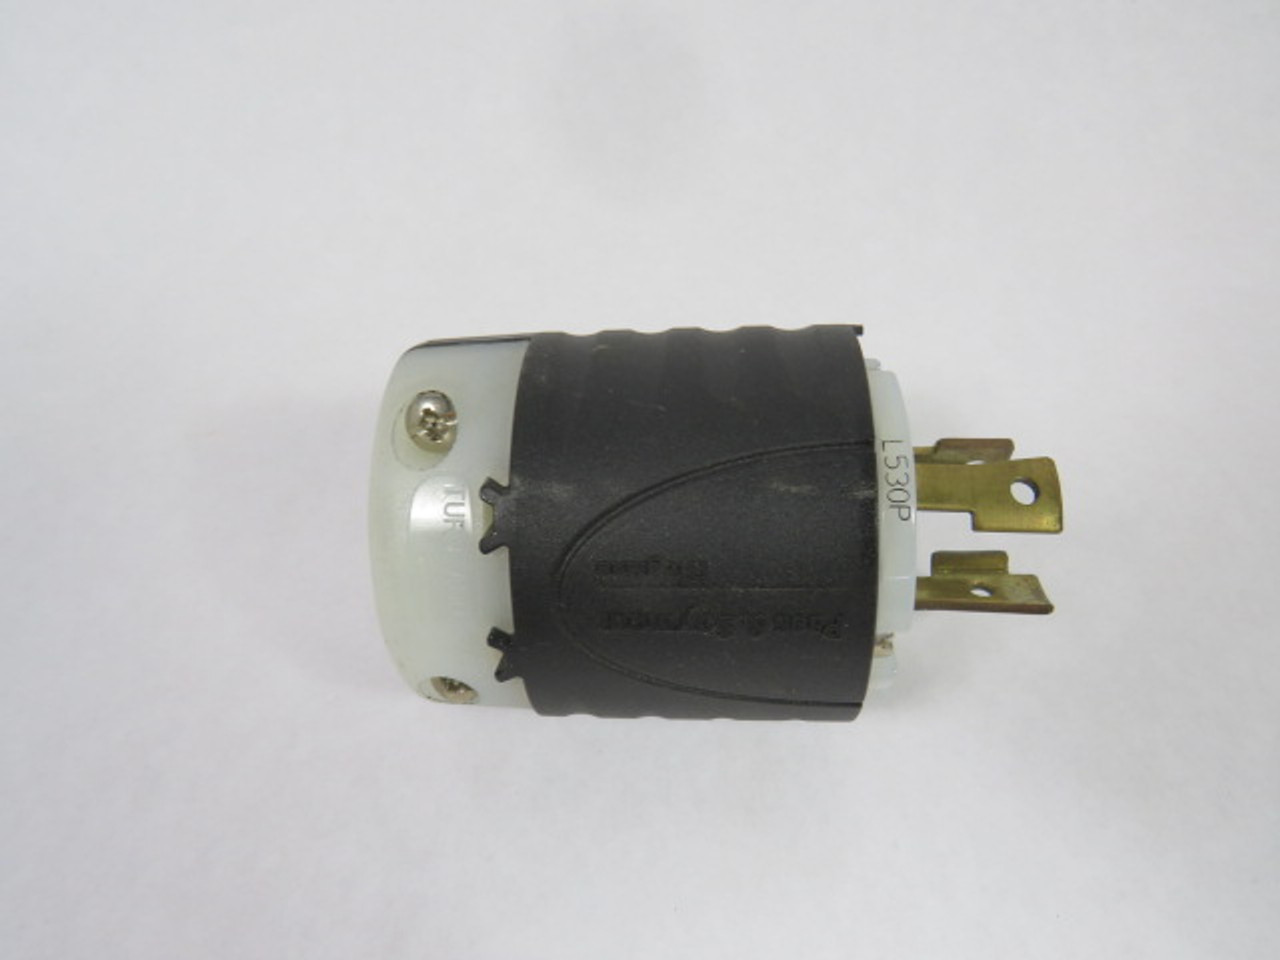 Pass & Seymour L530P Turnlok Locking Plug 30A 125V 3-Wire USED